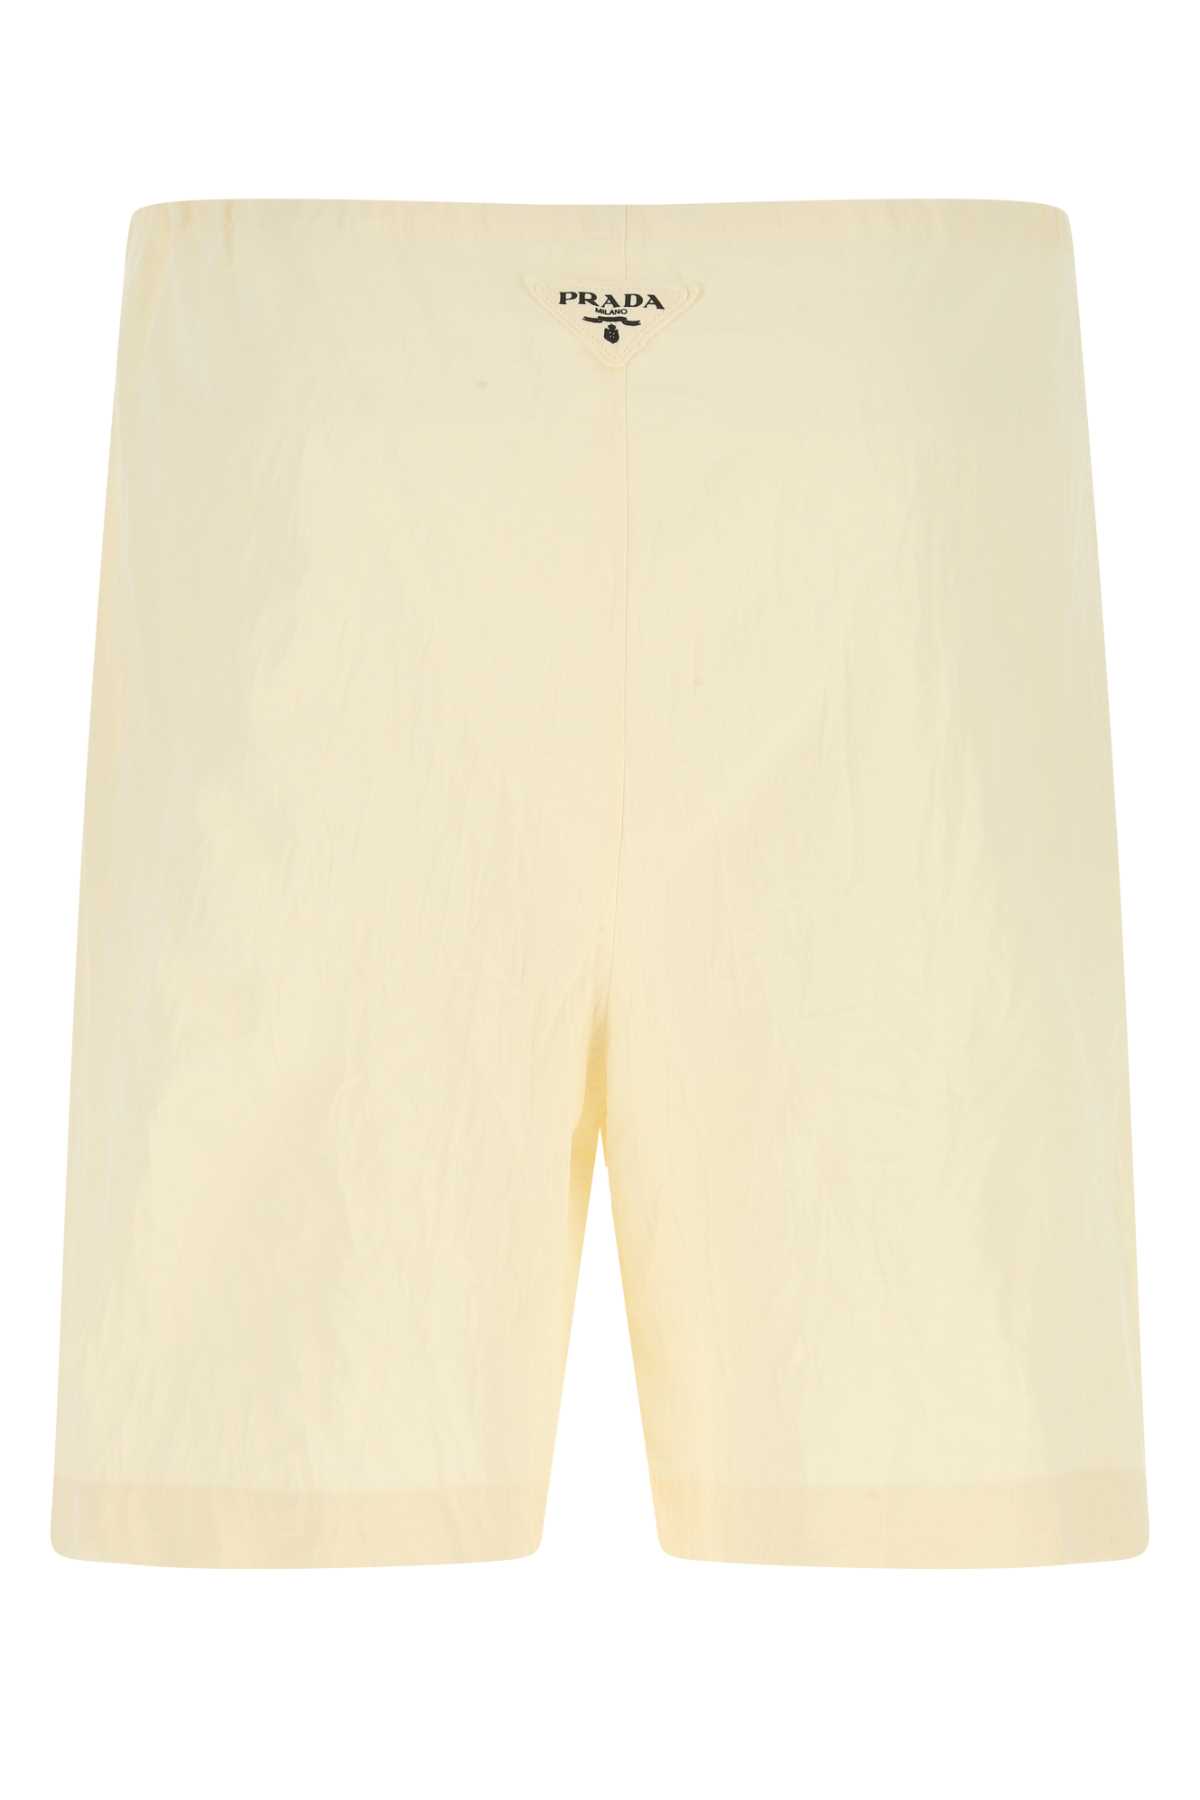 Prada Ivory Cotton Bermuda Shorts In F0304